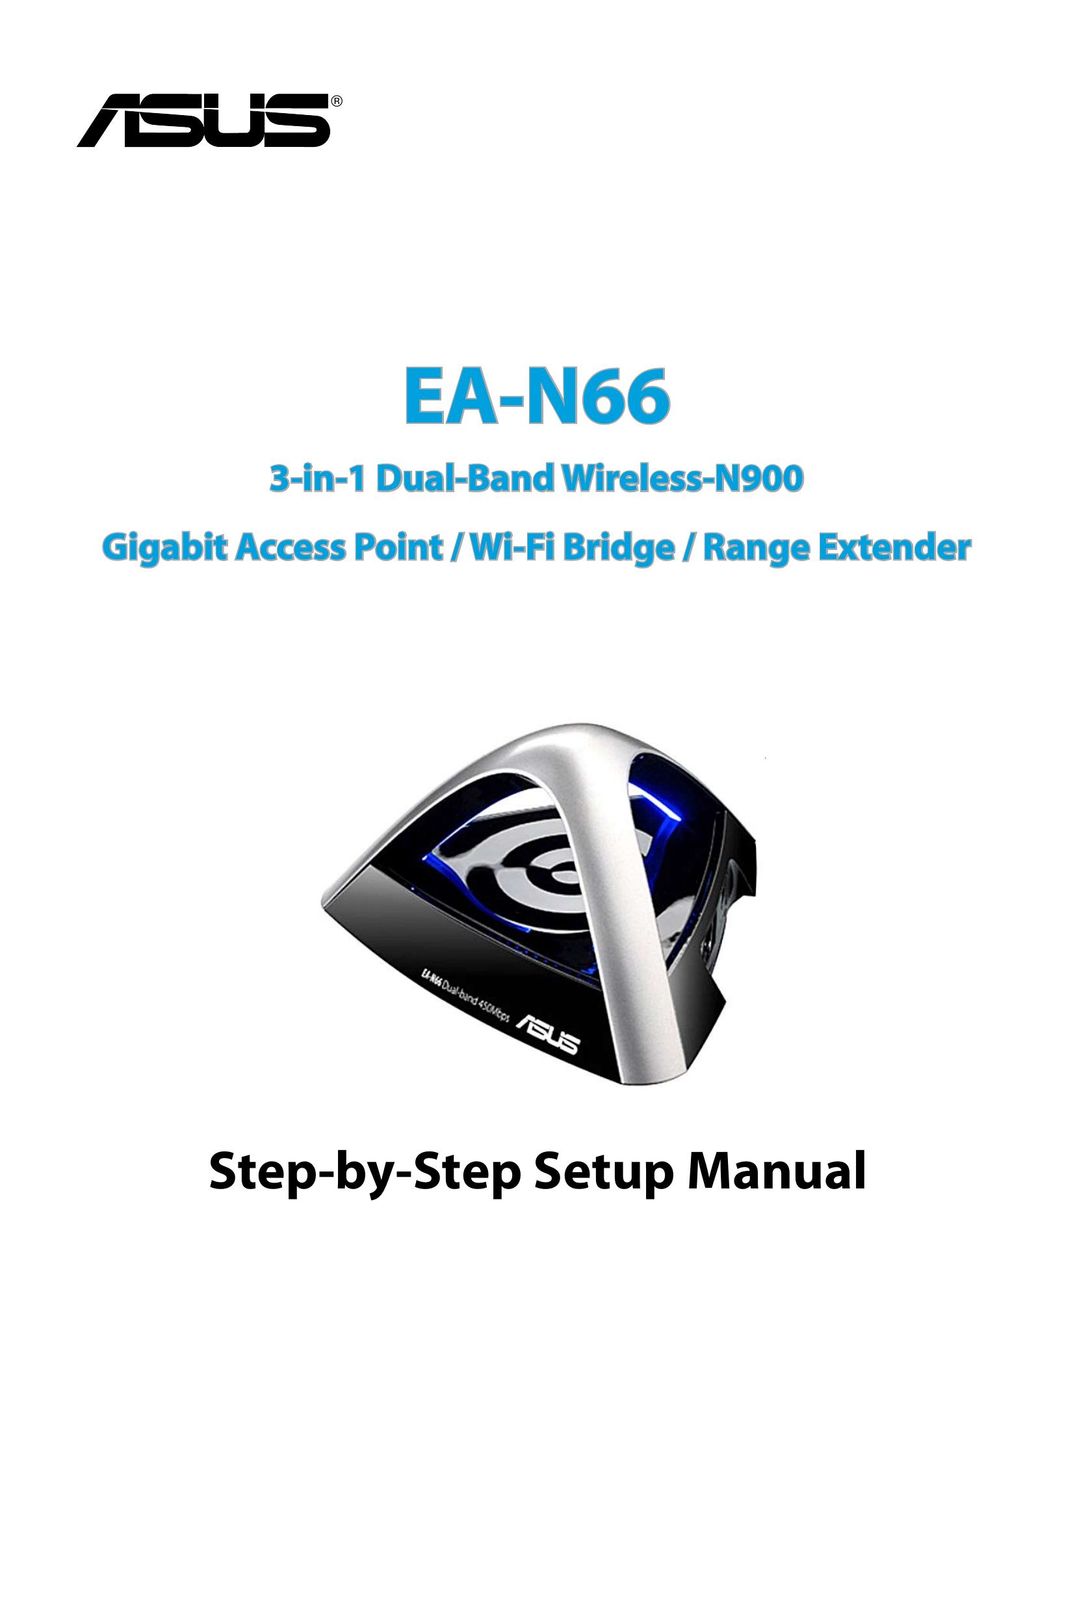 Asus EA-N66 Network Router User Manual